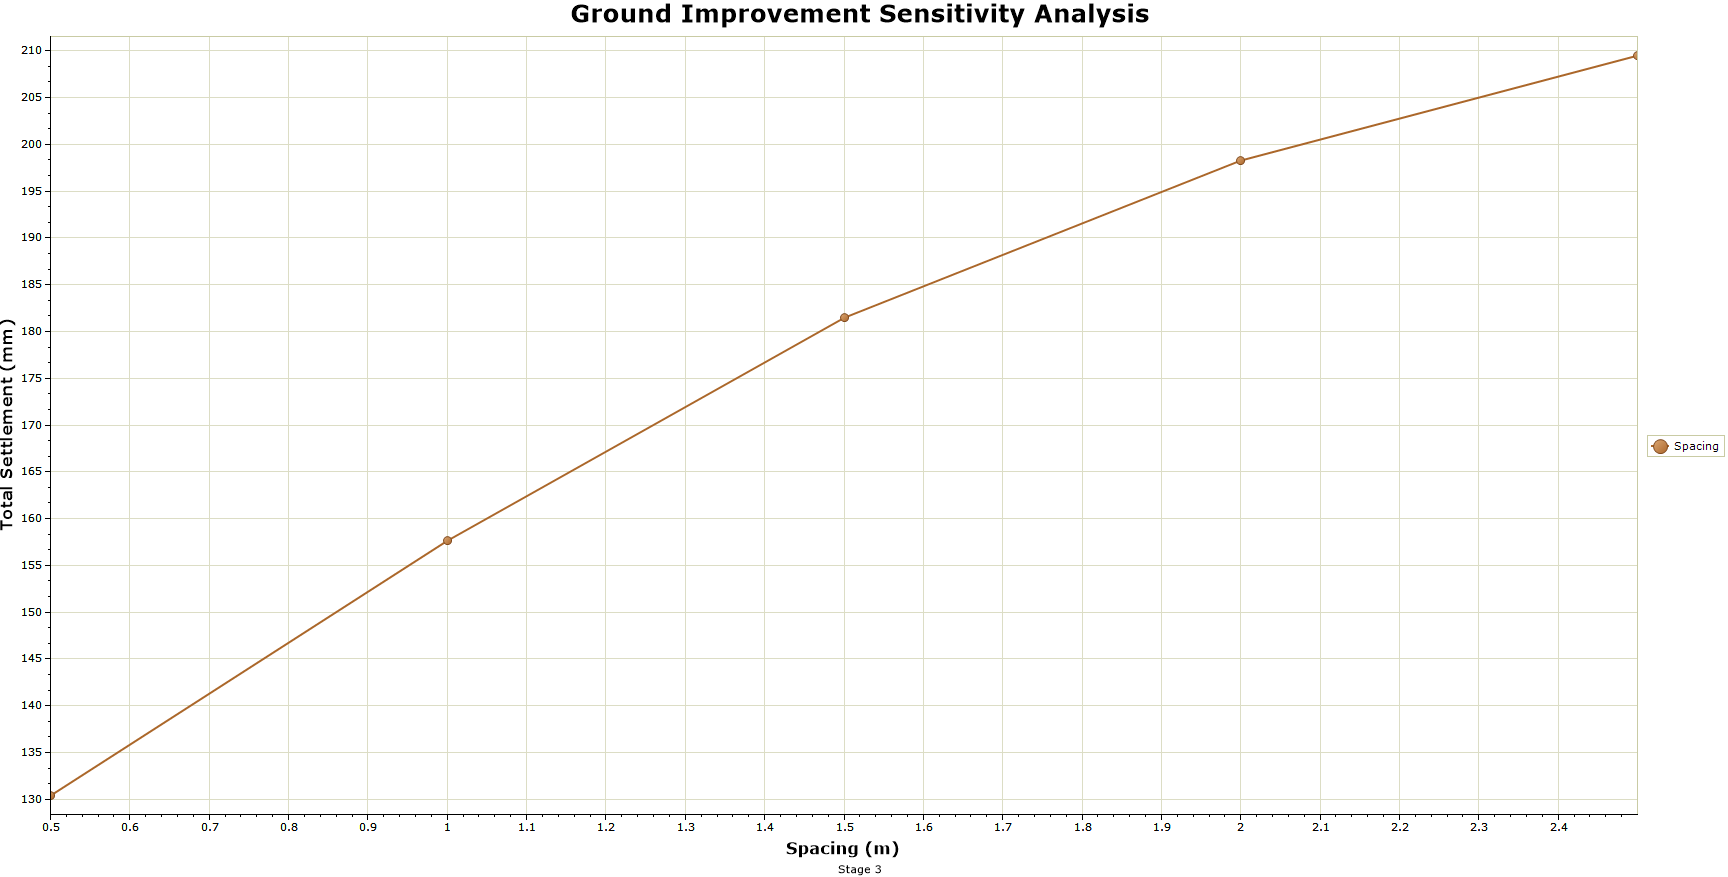 Ground Improvement Sensitivity Analysis plot